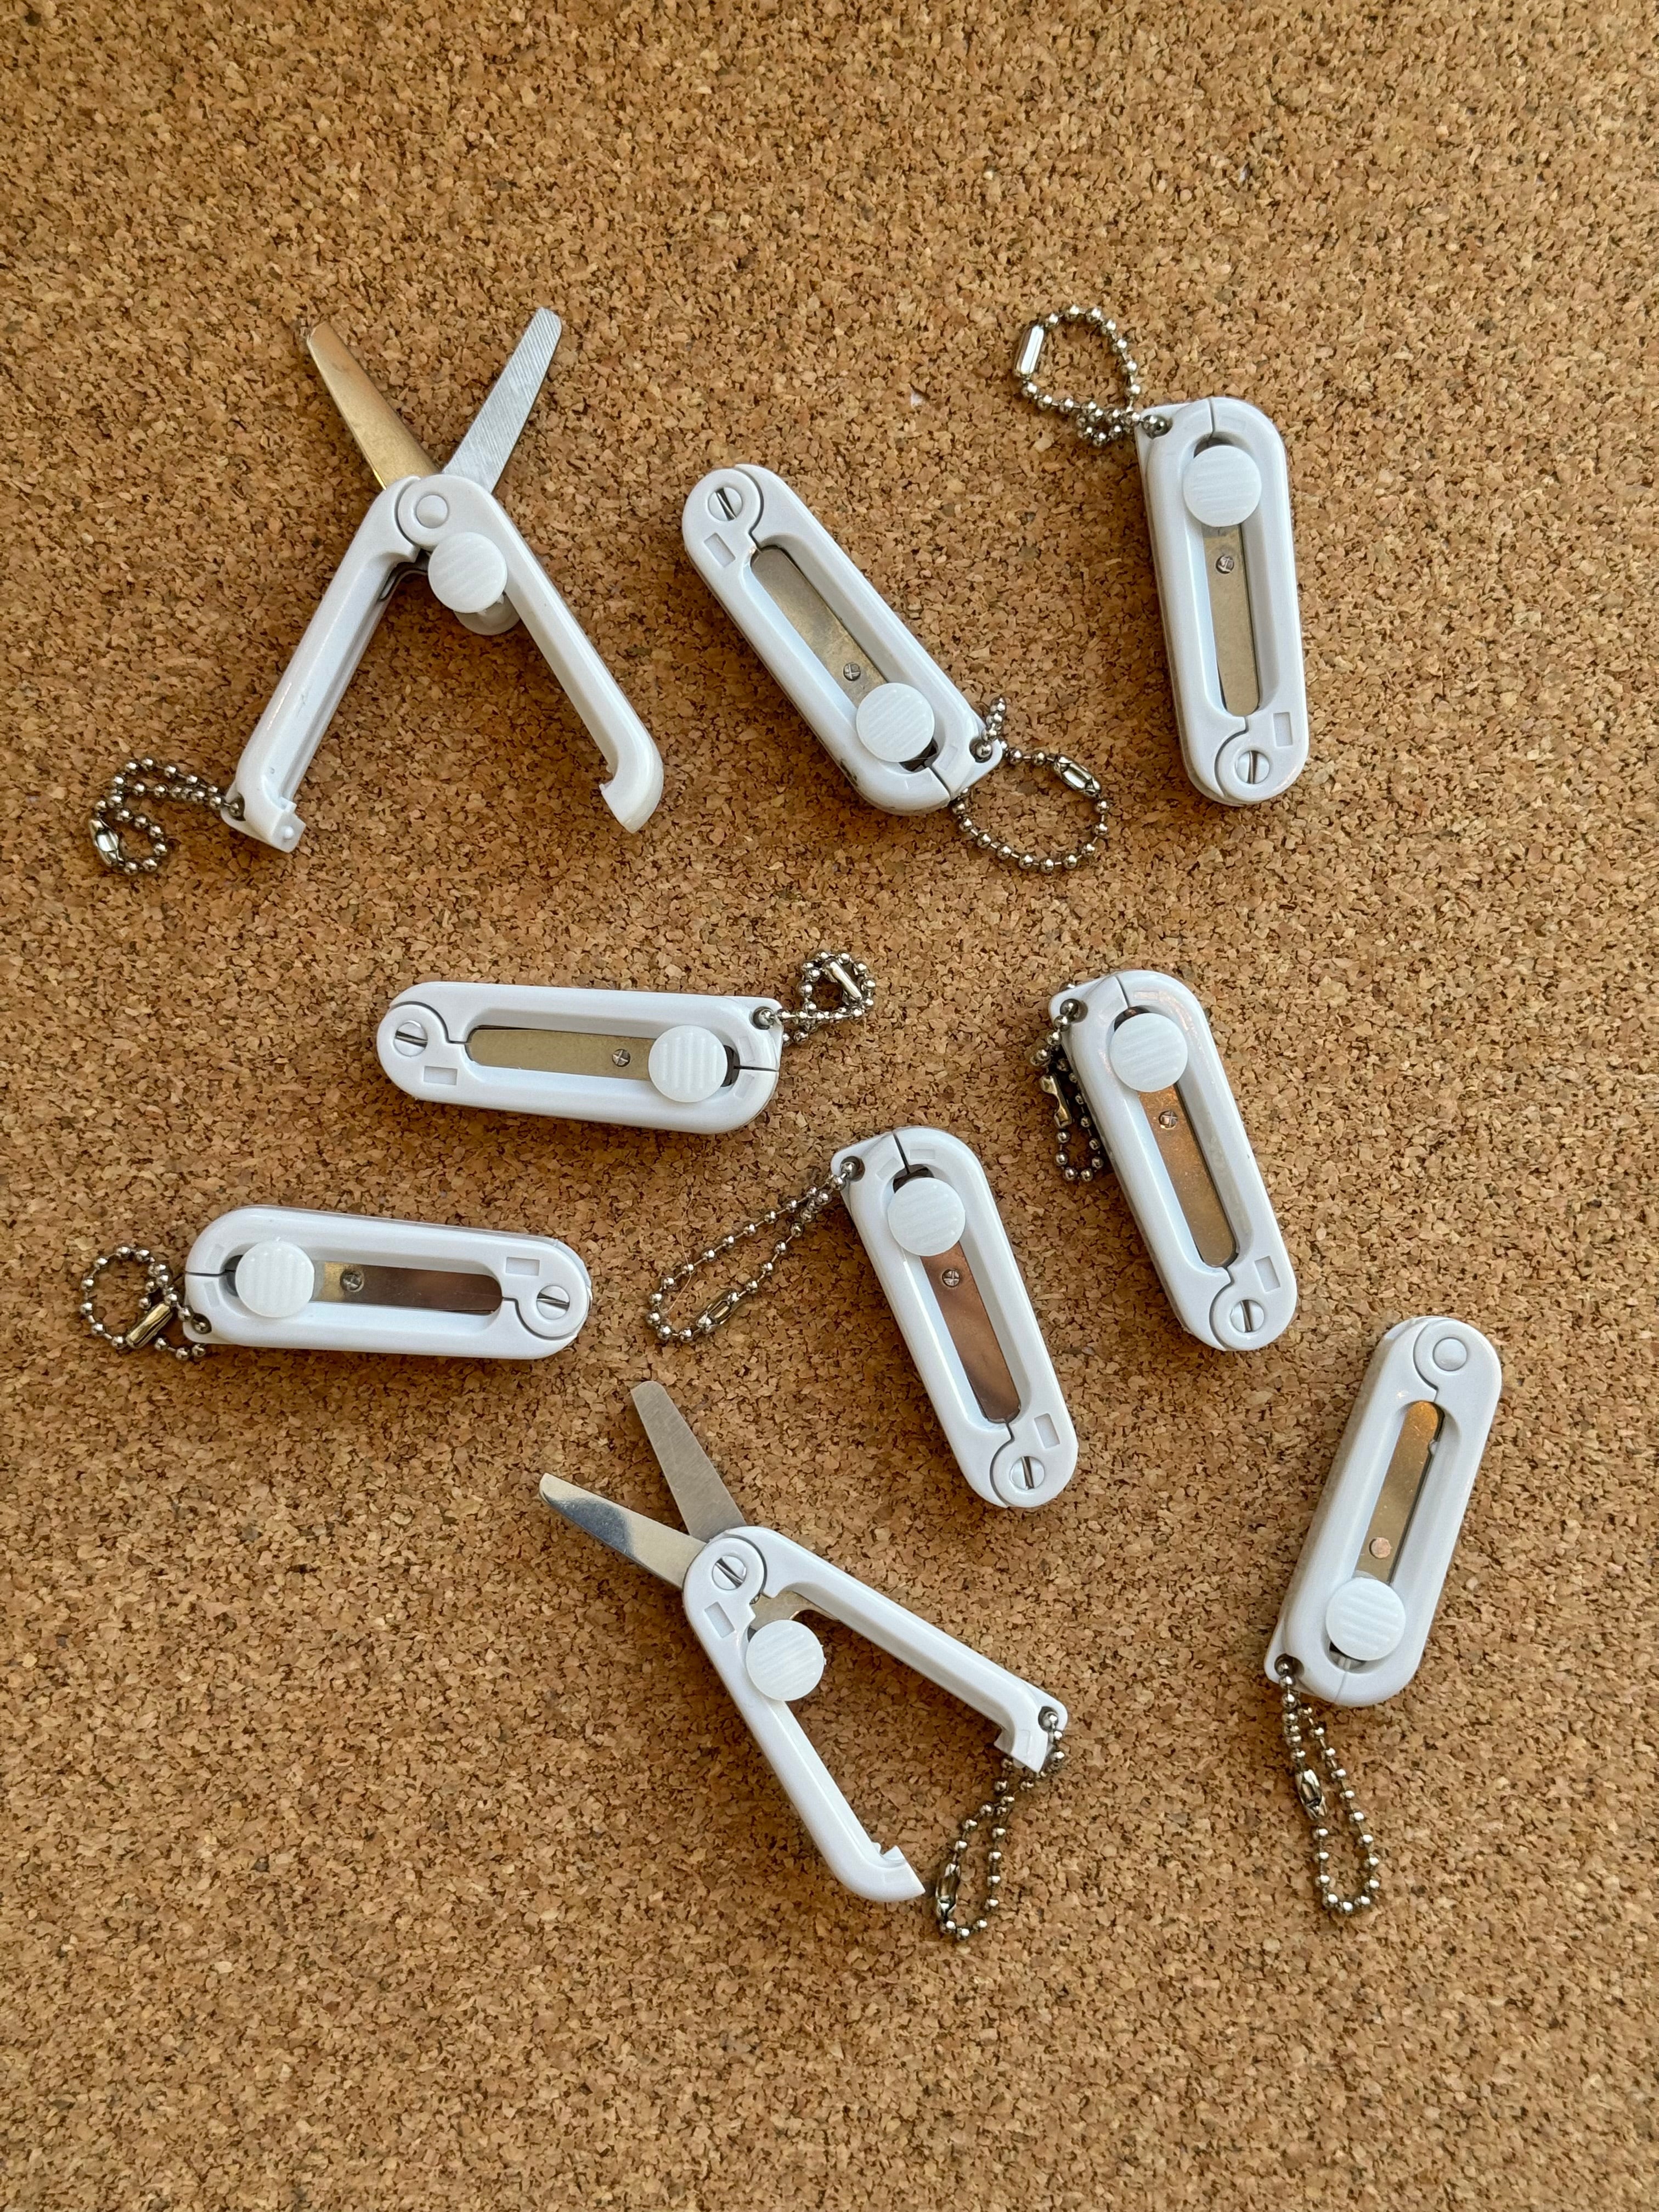 Small folding scissors keychain